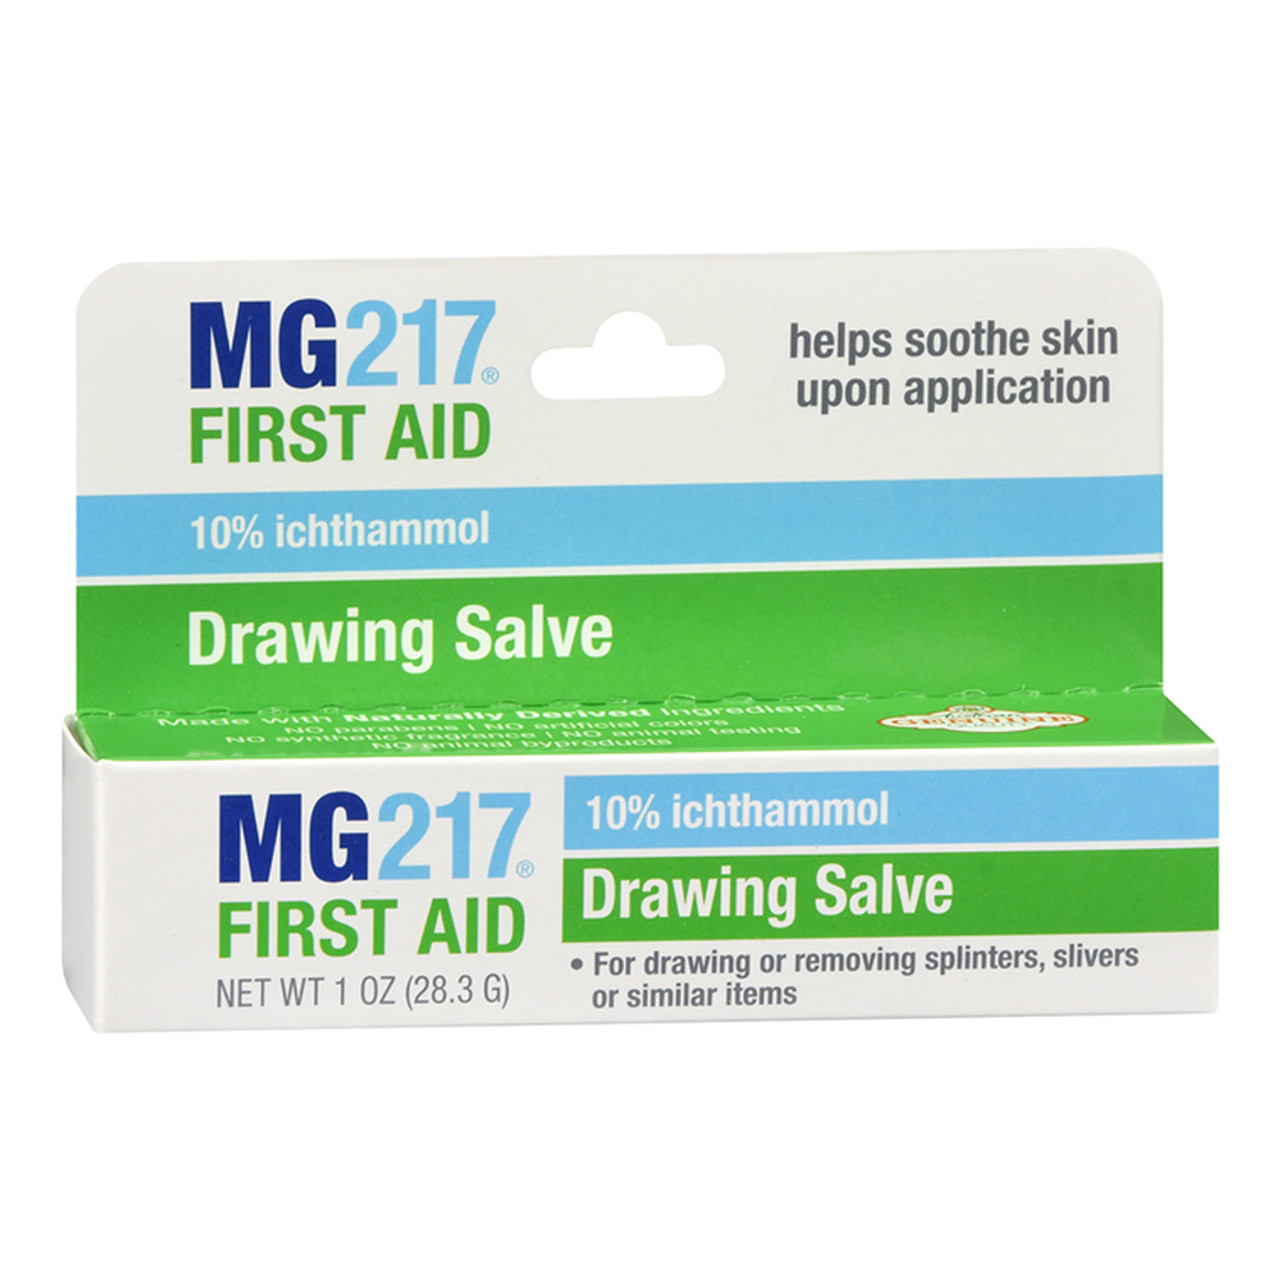 MG 217 First Aid Ichthammol Drawing Salve Tube, 1 Oz